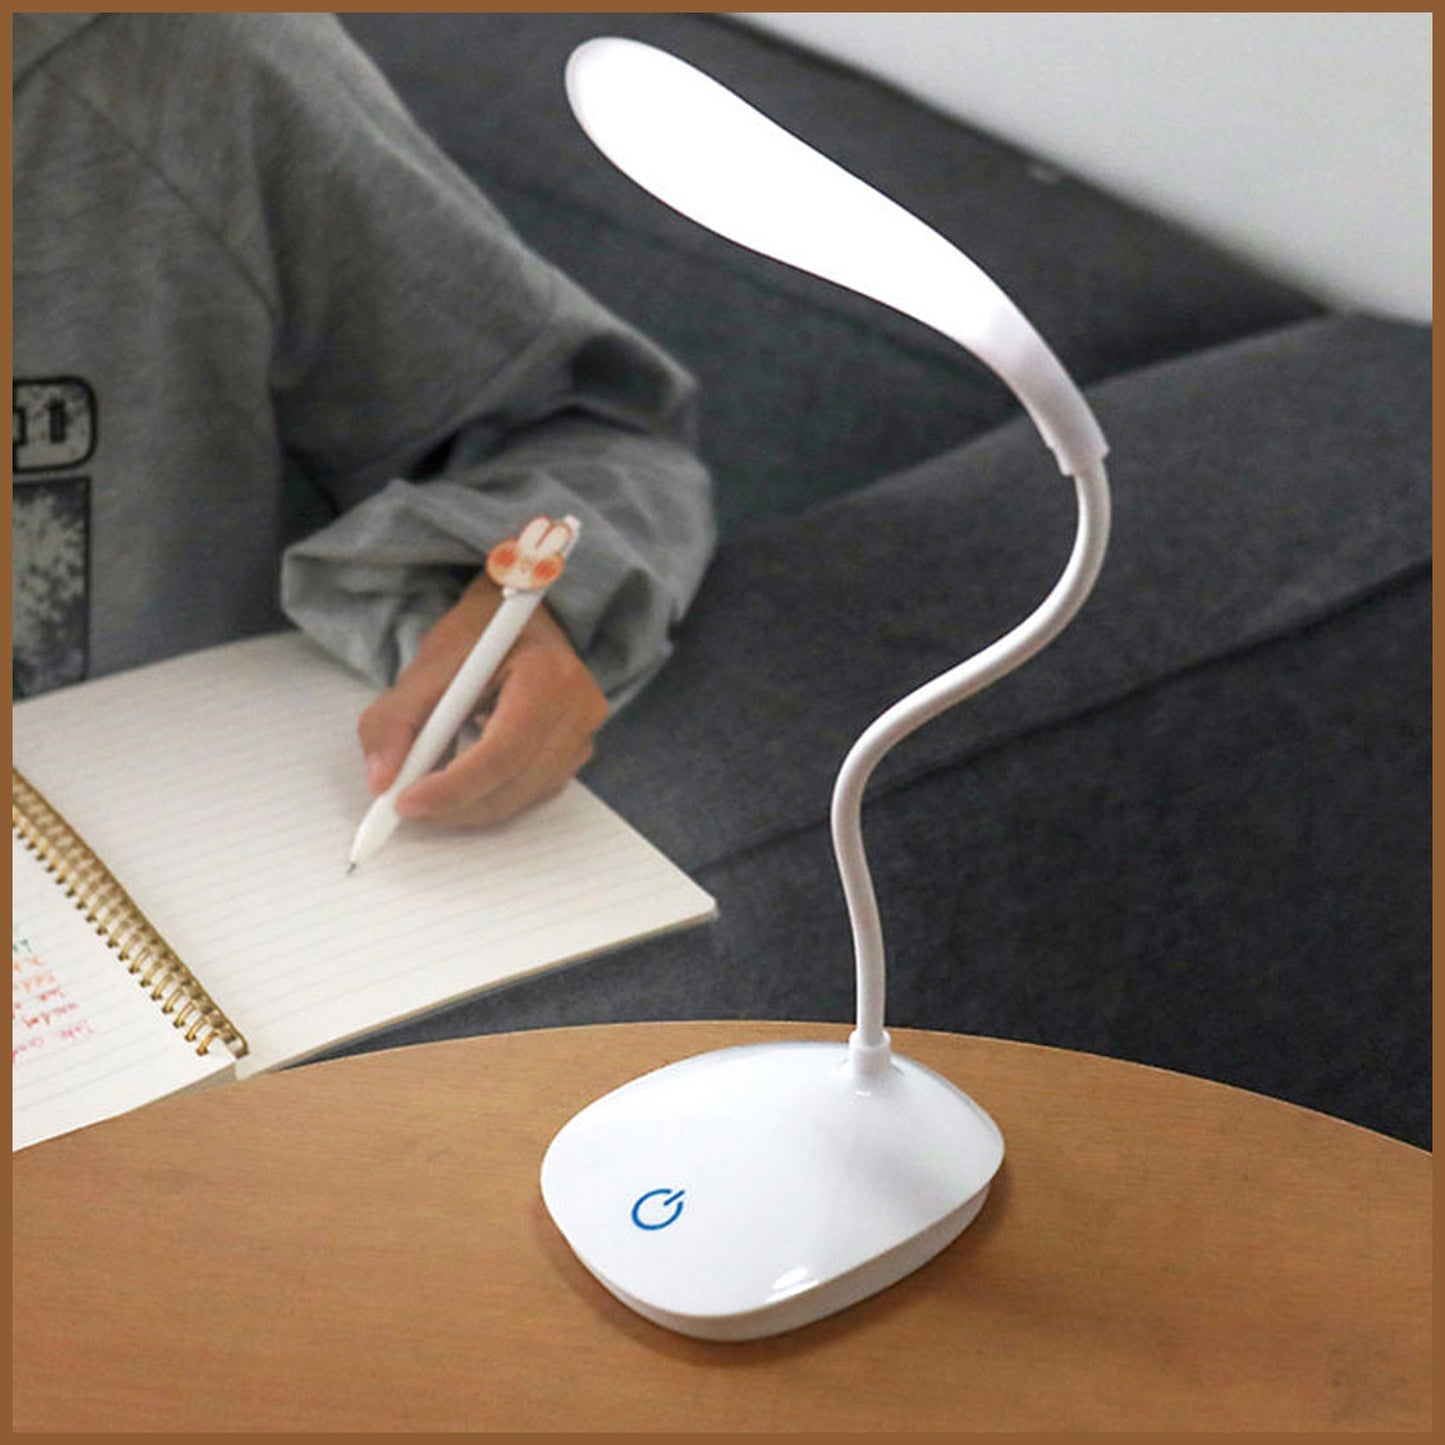 WRADER 360 Degree Flexible Study Table Lamp White Light Table Lamp with 3 Brightness Modes LED White LED Light for Study and Reading Books Led Light